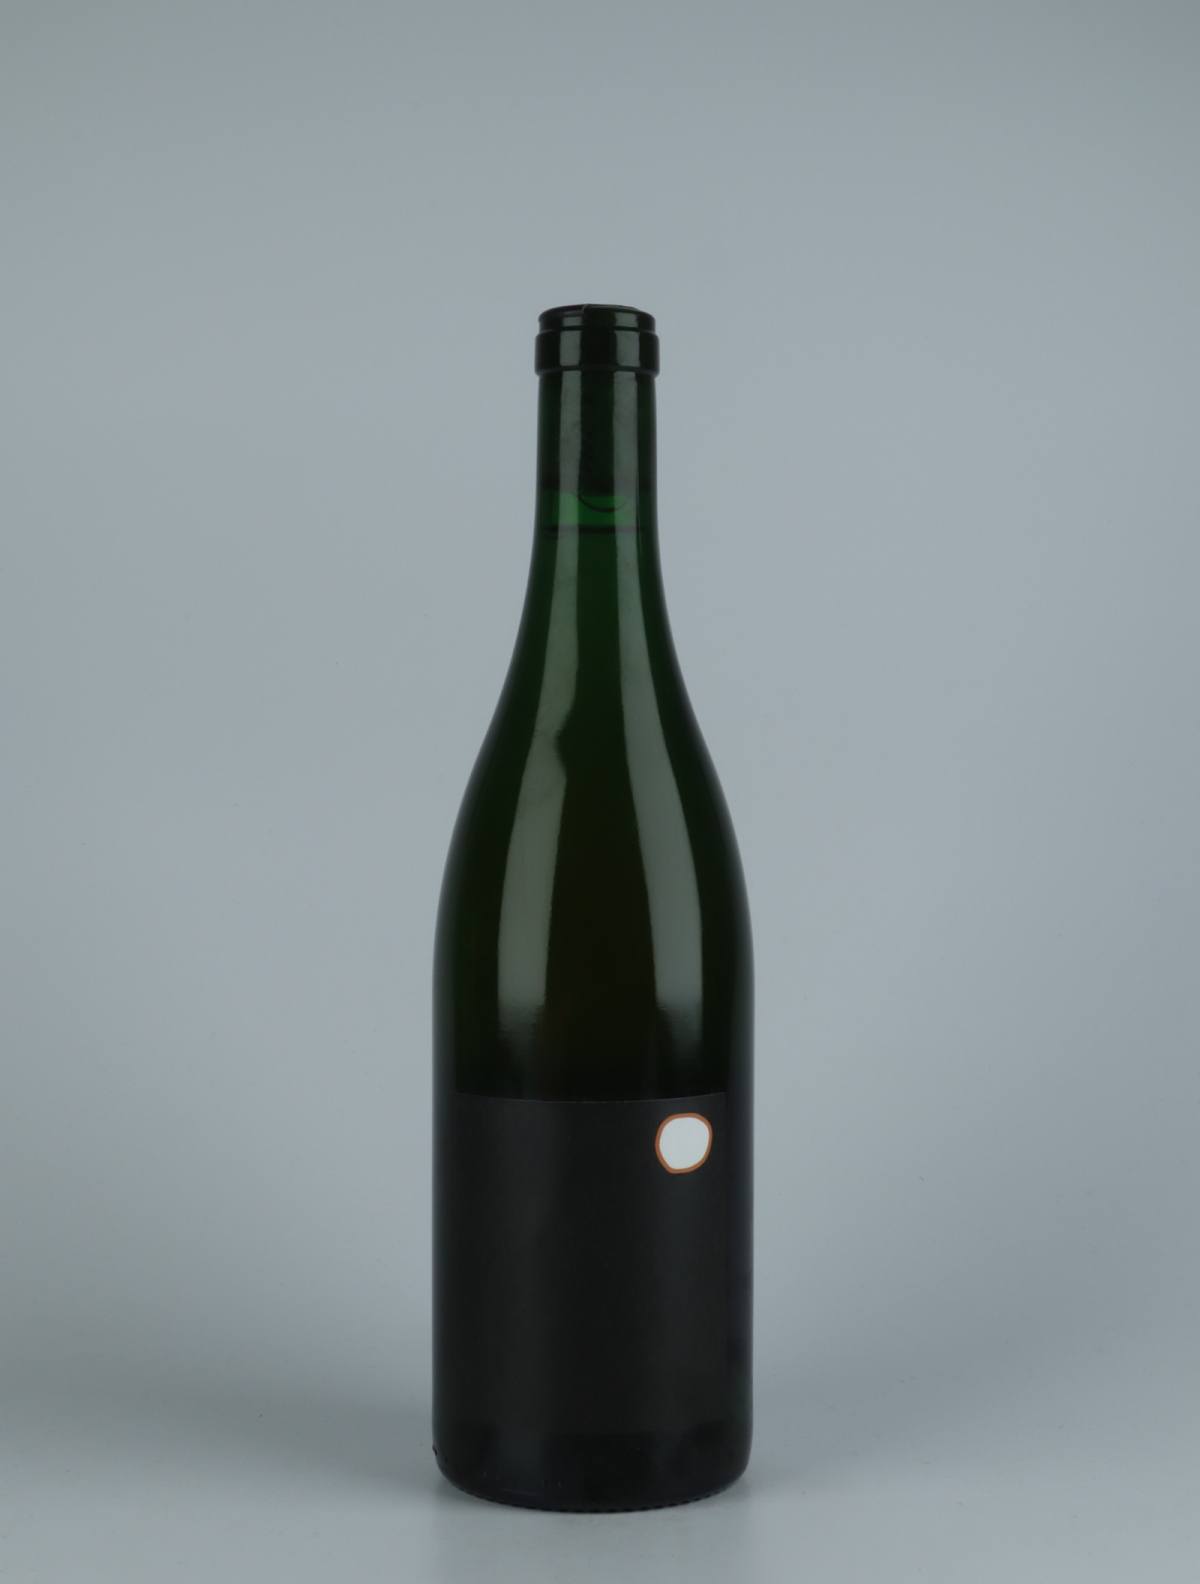 A bottle 2020 Chardonnay Maceration - Anonyme Orange wine from Romuald Valot, Beaujolais in France